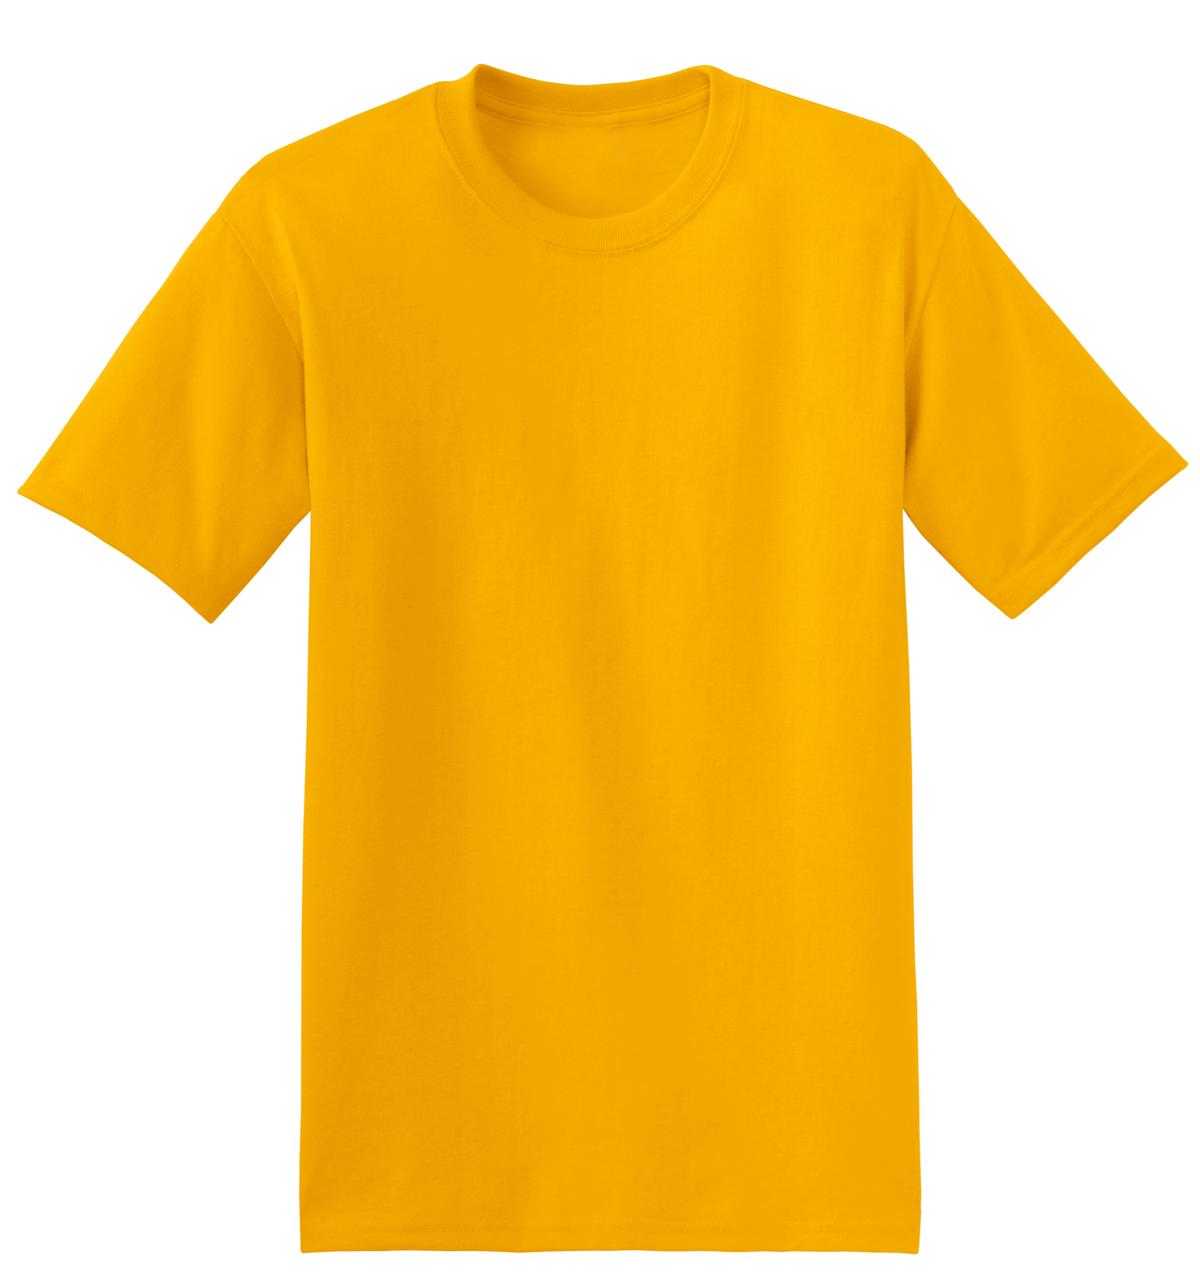 Hanes 5170 Ecosmart 50/50 Cotton/Poly T-Shirt - Gold - HIT a Double